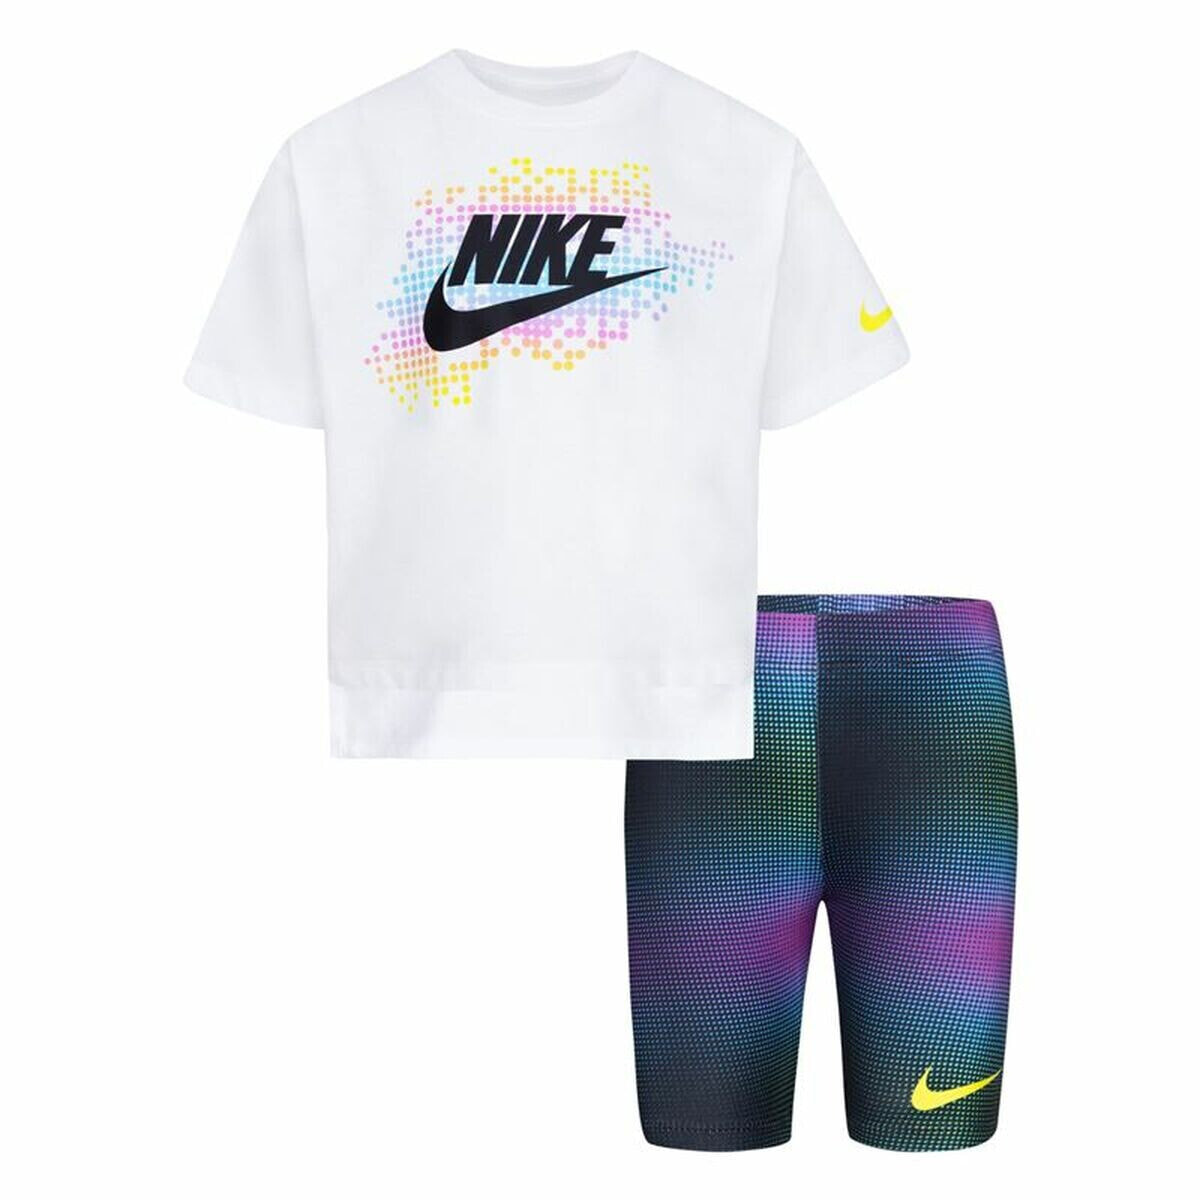 Children's Sports Outfit Nike Aop Bike White Multicolour 2 Pieces